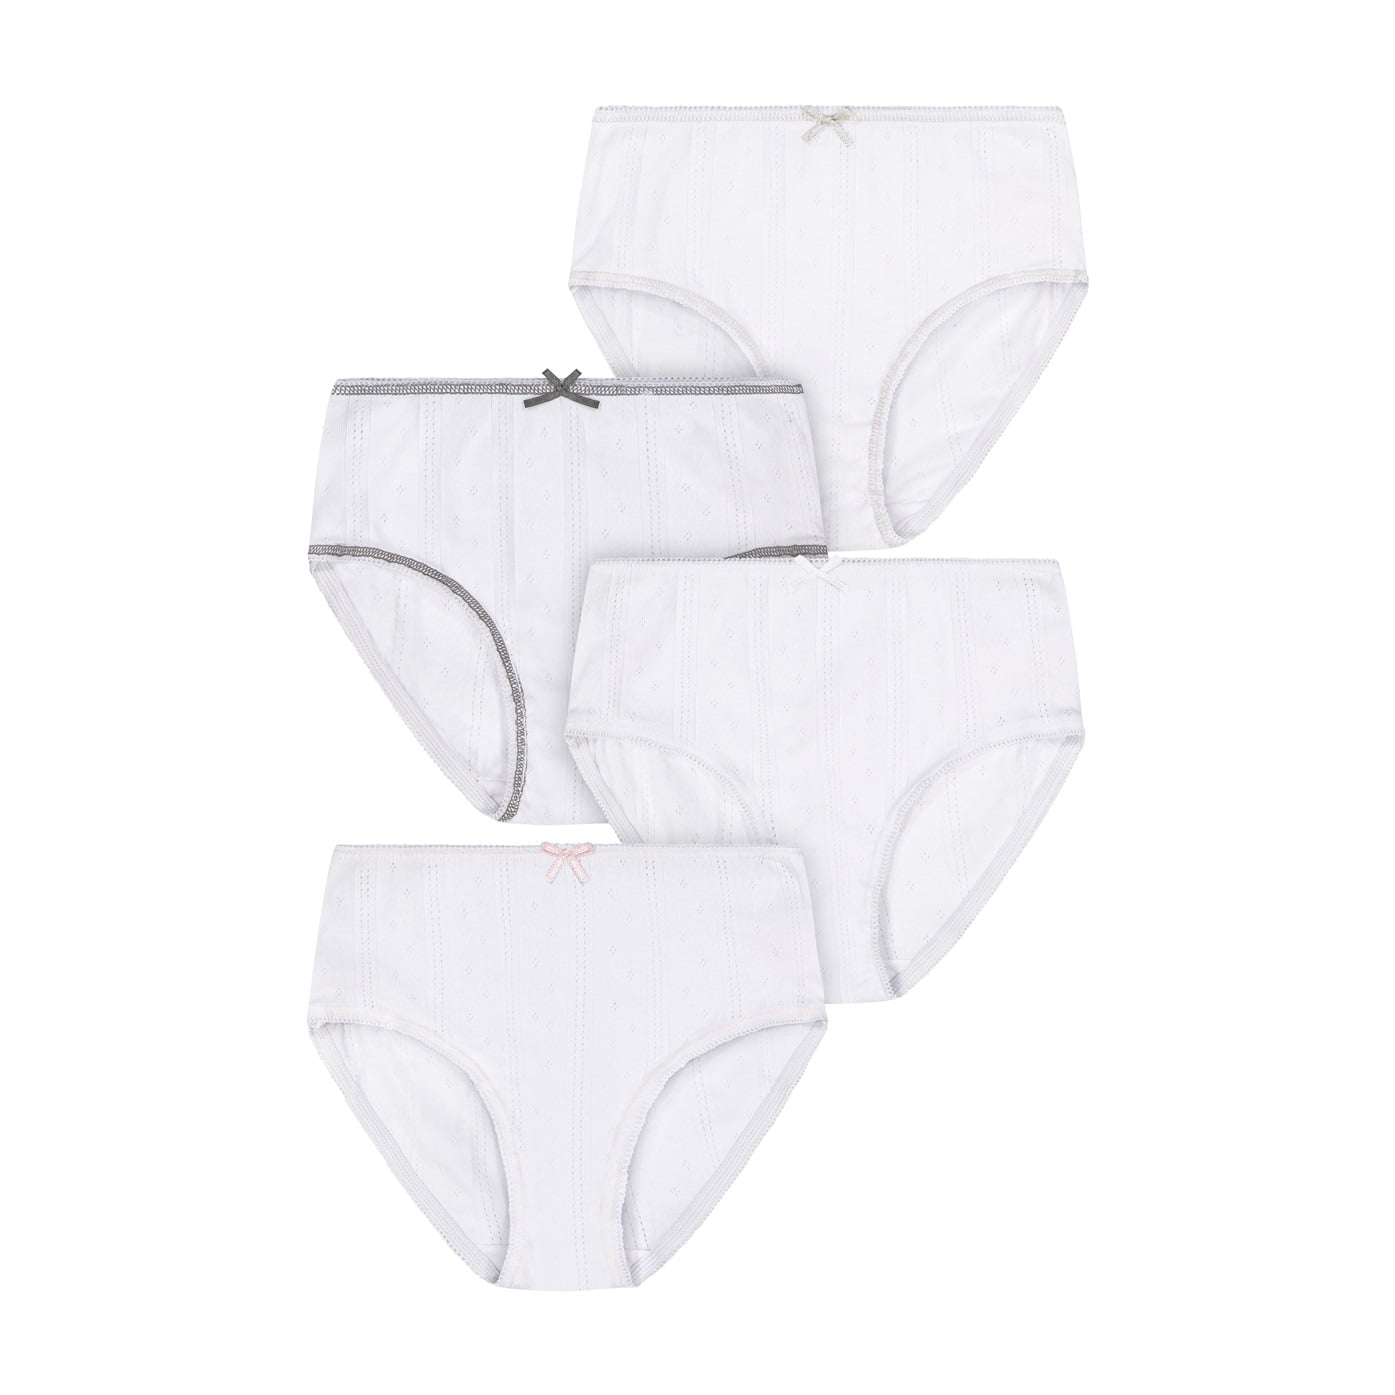 Buyless Fashion Little Girl Toddler Panties Assorted Prints Soft Cotton Big  Kids Briefs Underwear 4 Pack